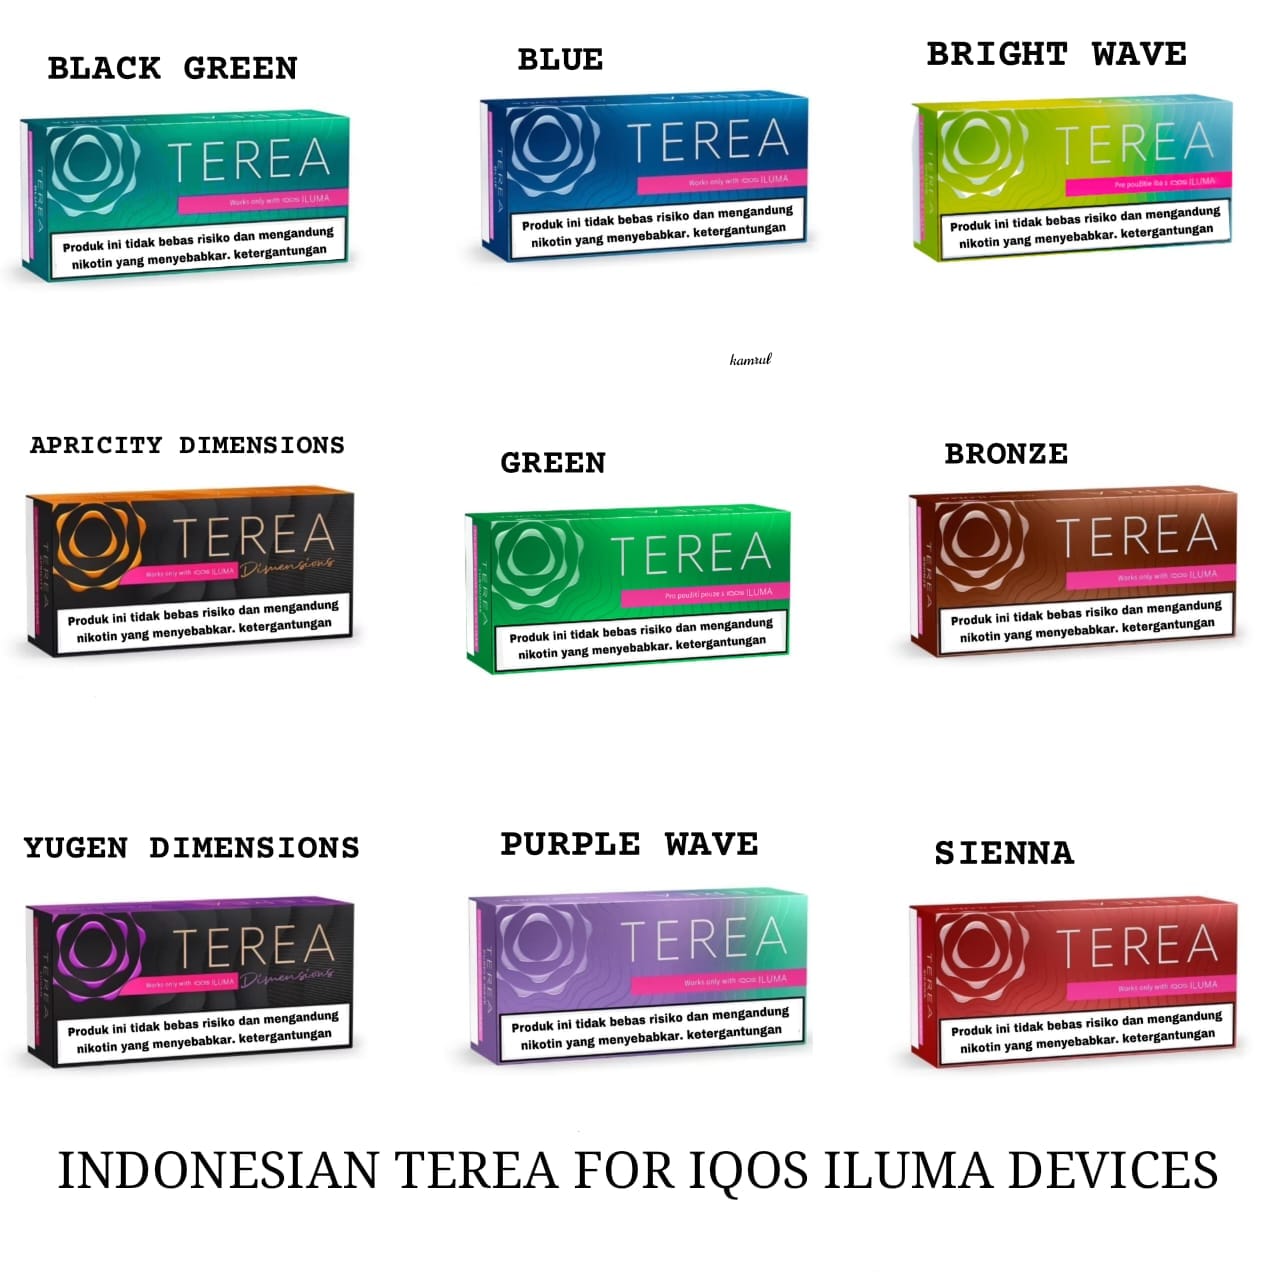 New IQOS Terea Indonesian (Terea Black Green) Best Price in UAE